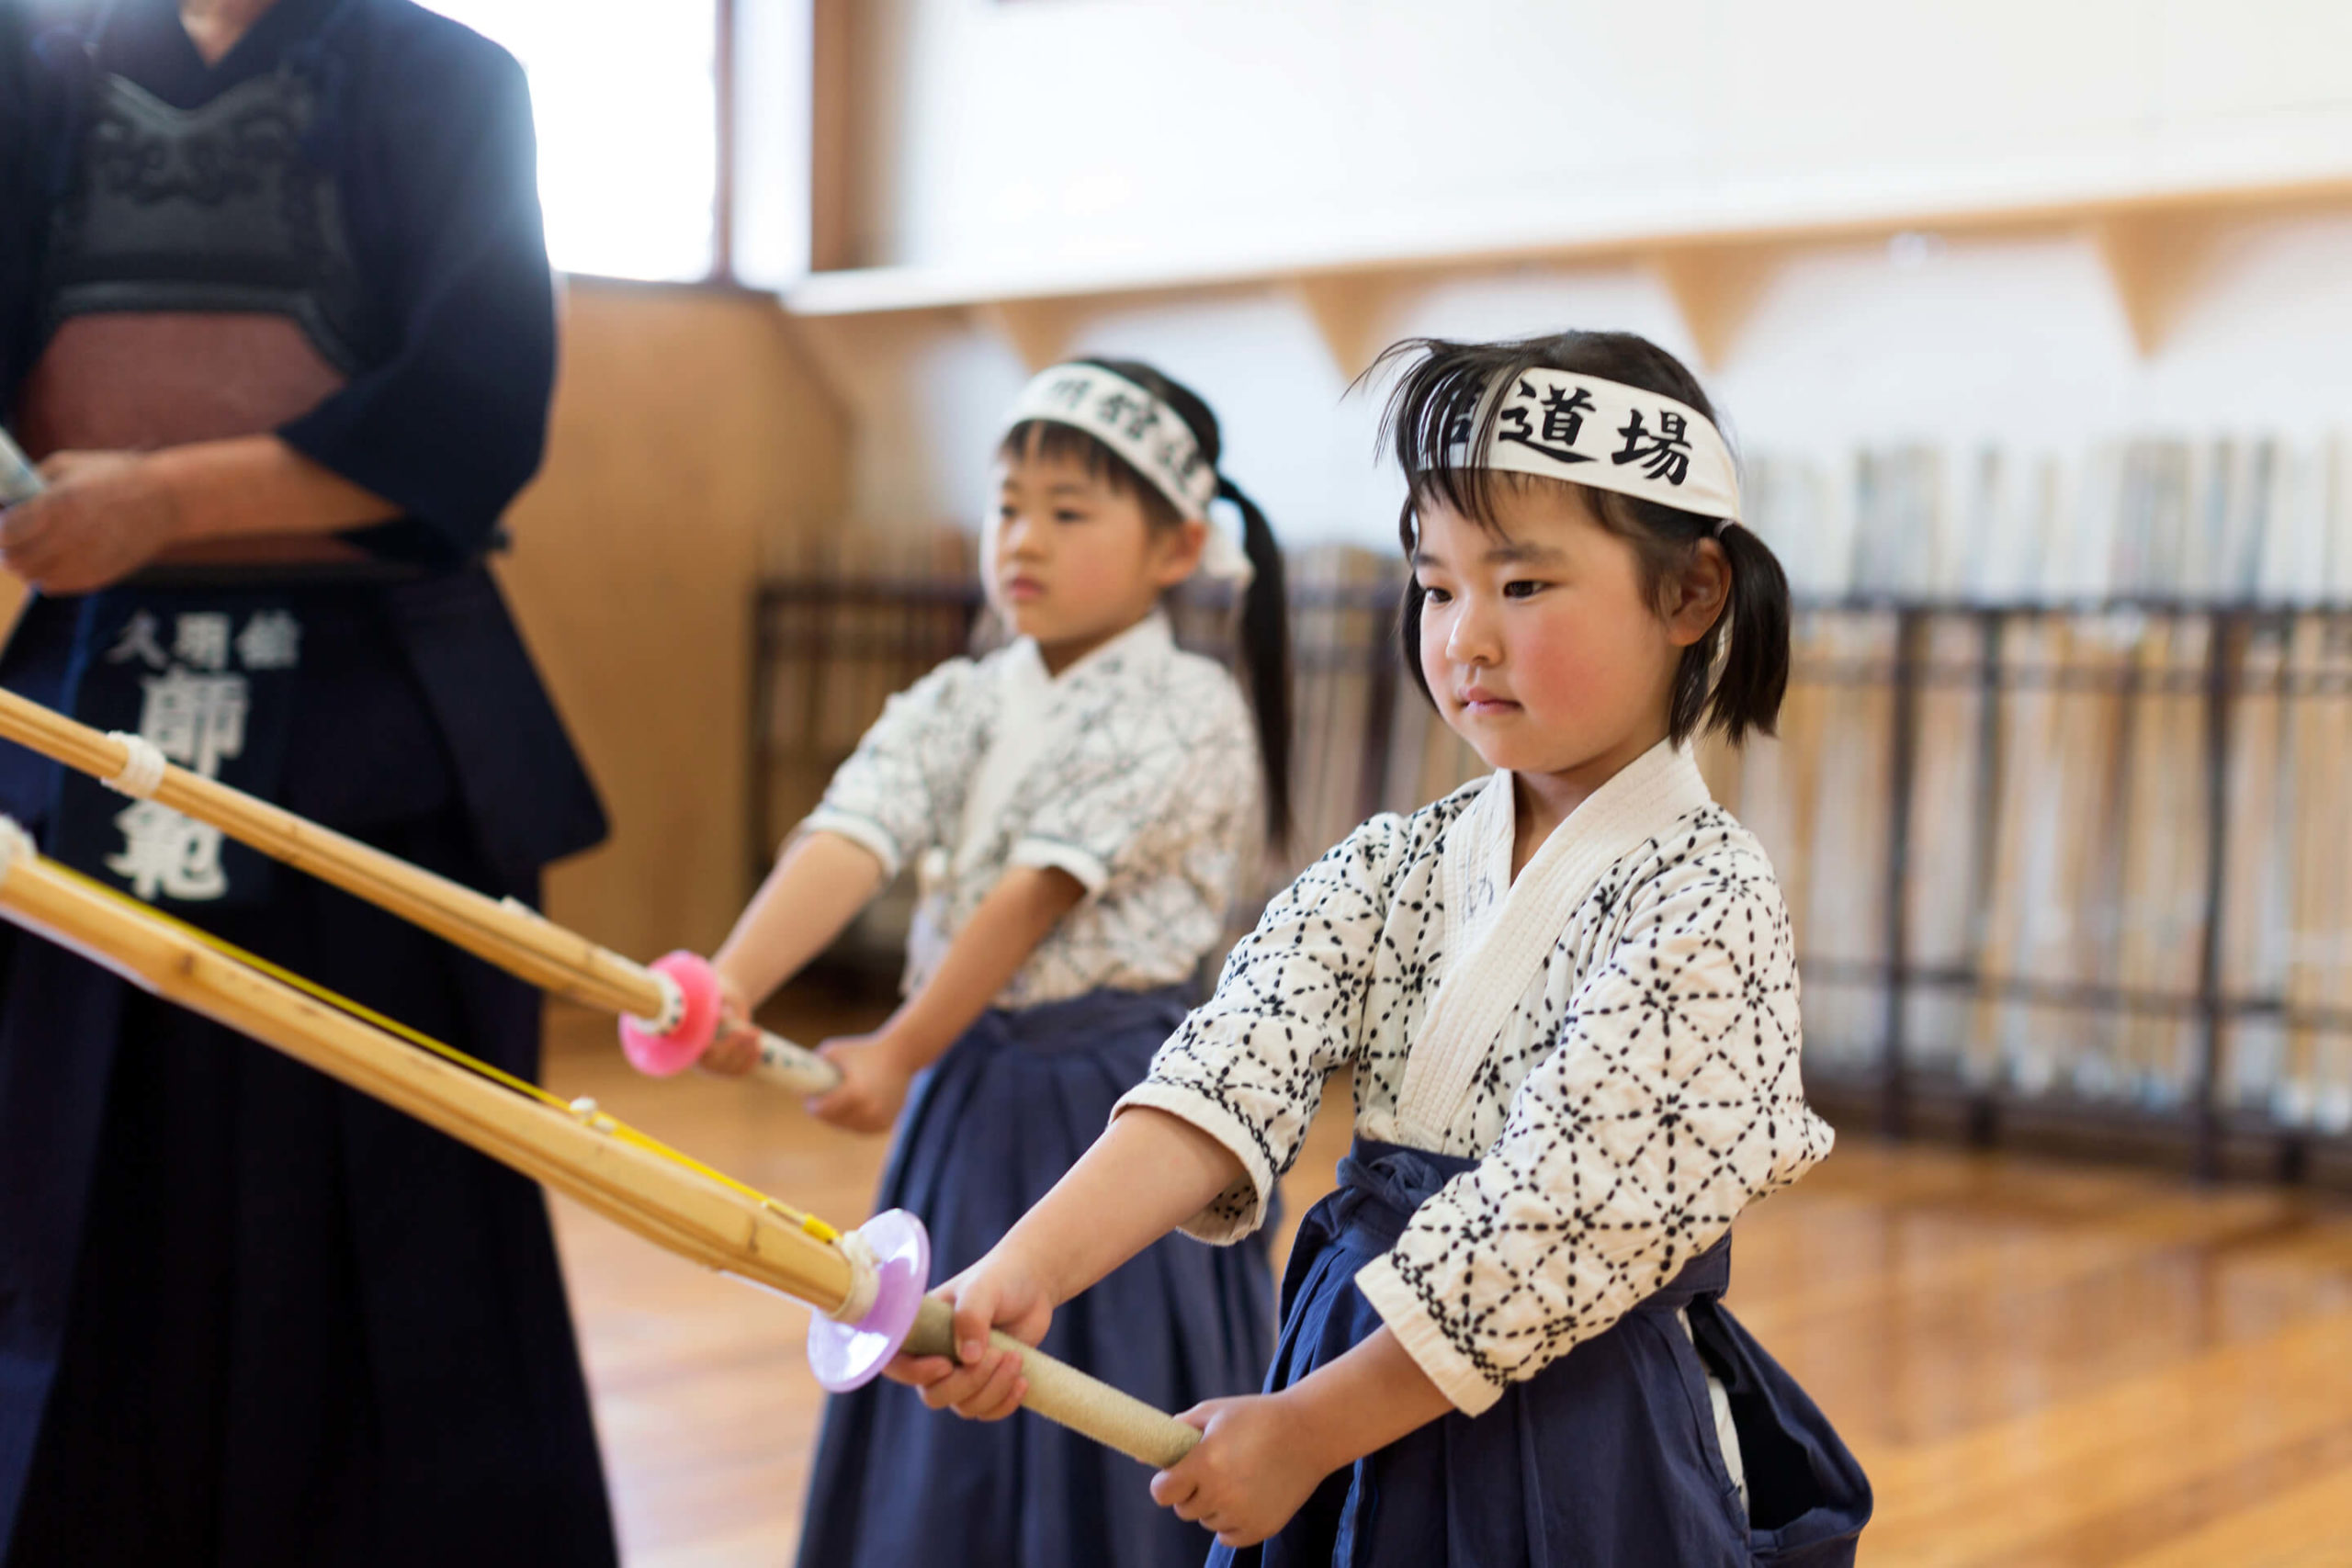 Japanese martial art discipline